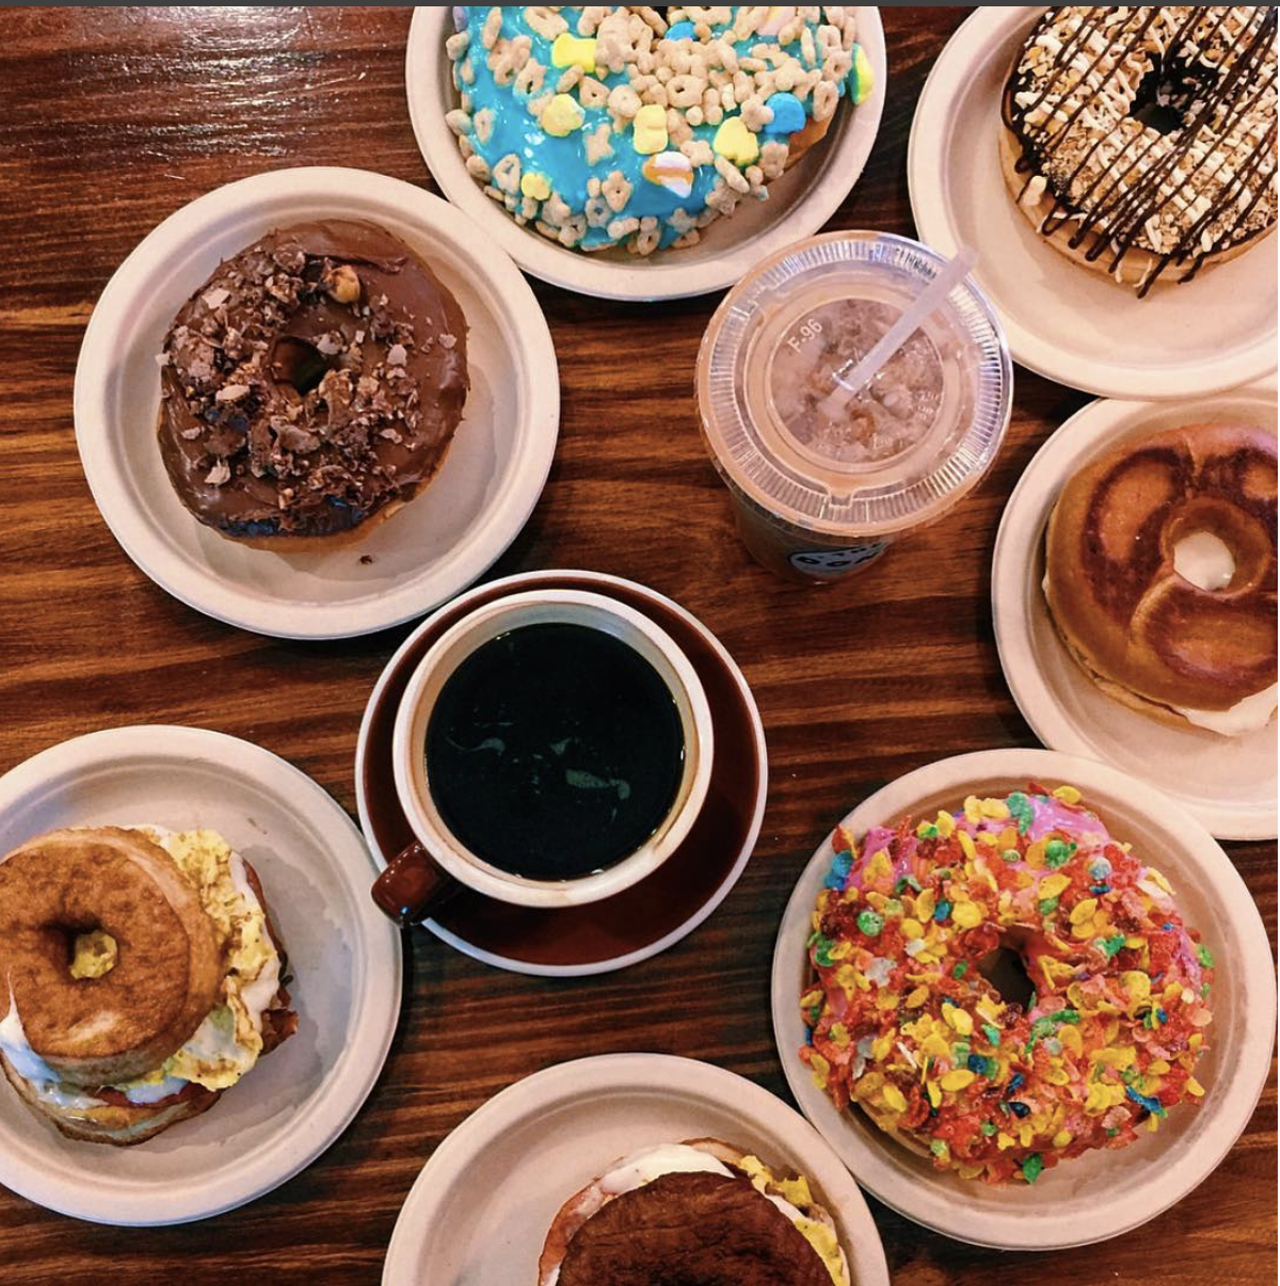 Photo via Instagram / The Art of Donut 